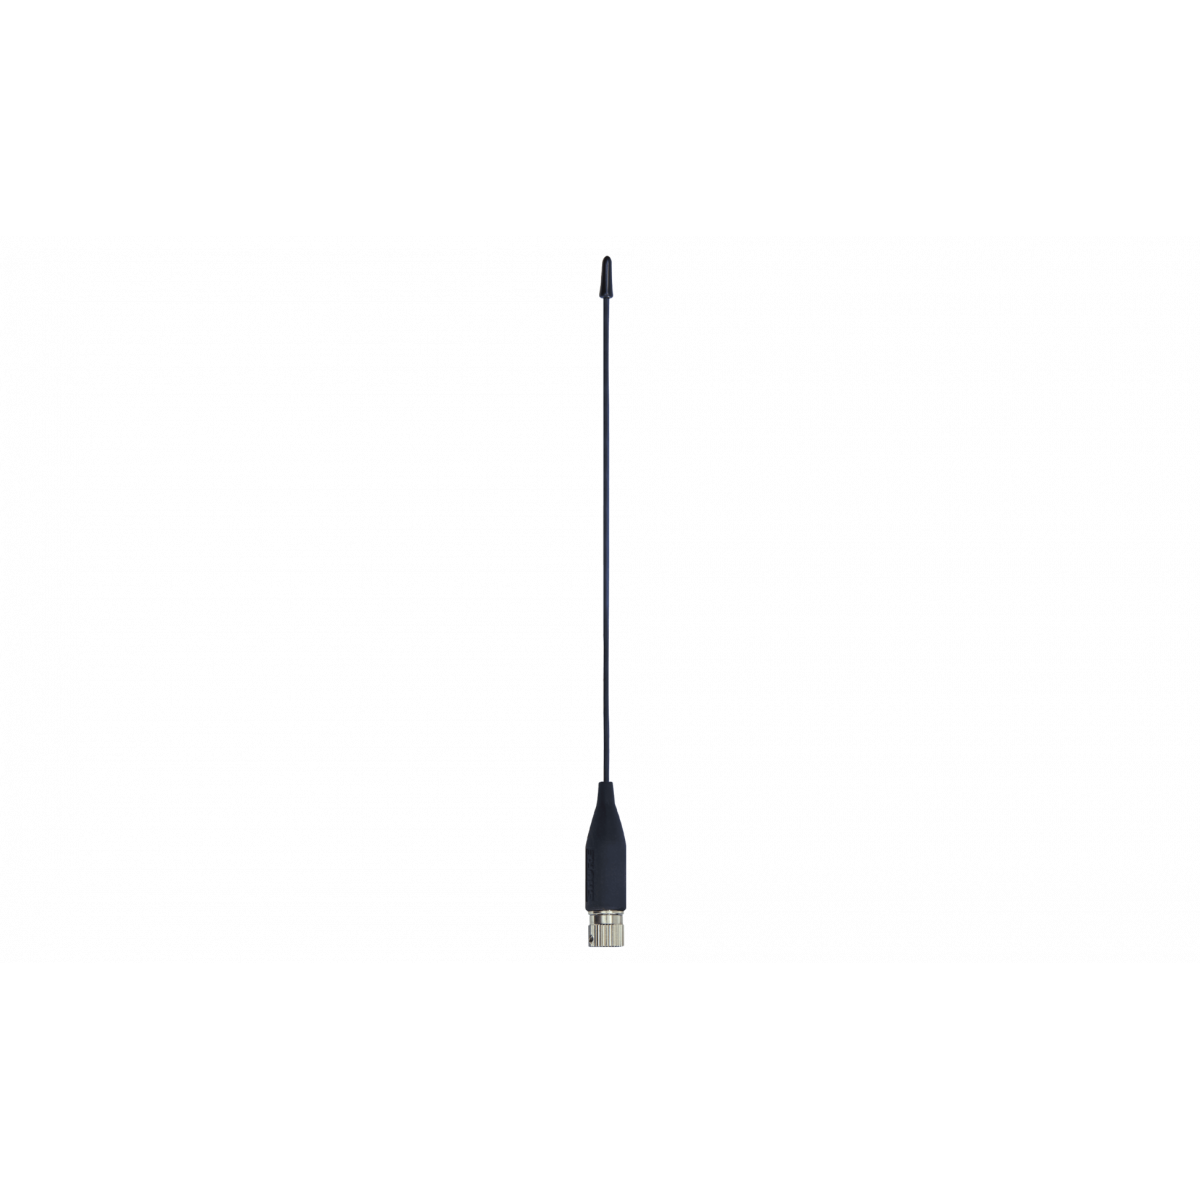 Antena para Transmisor / Receptor de Petaca 174-216MHz.